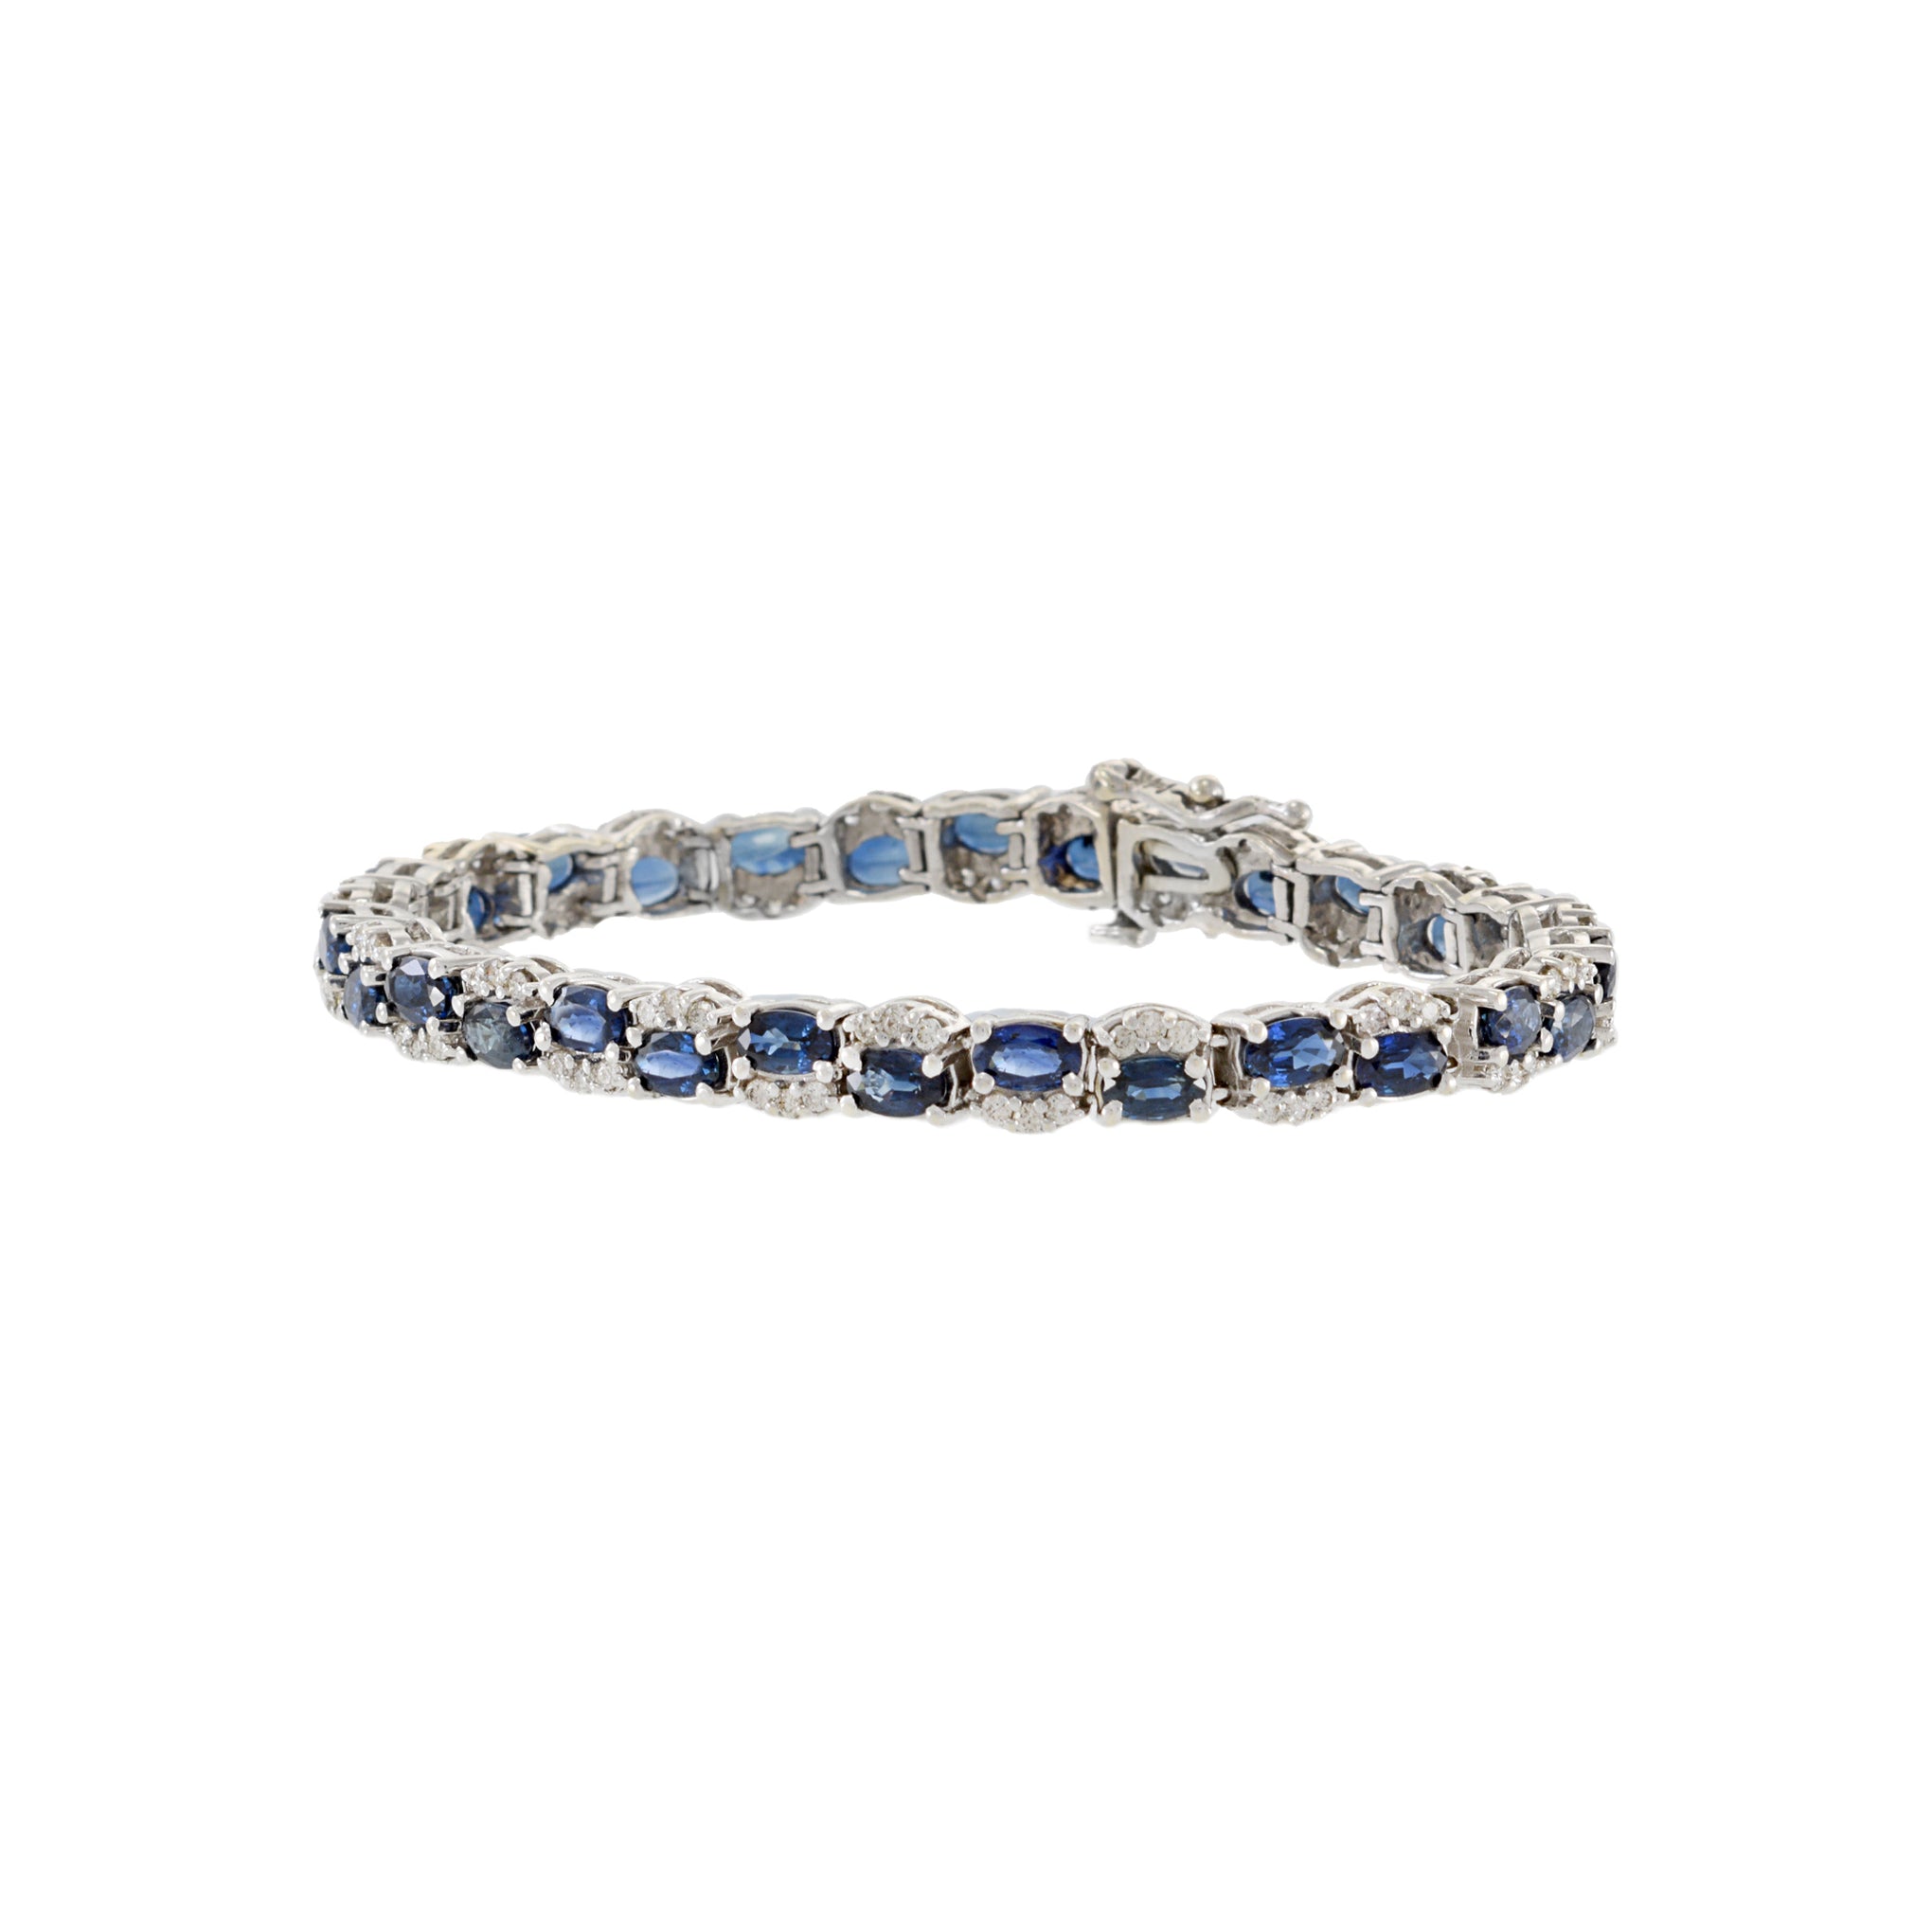 Estate 14KT White Gold Alternating Genuine Blue Sapphire And Diamond Bracelet